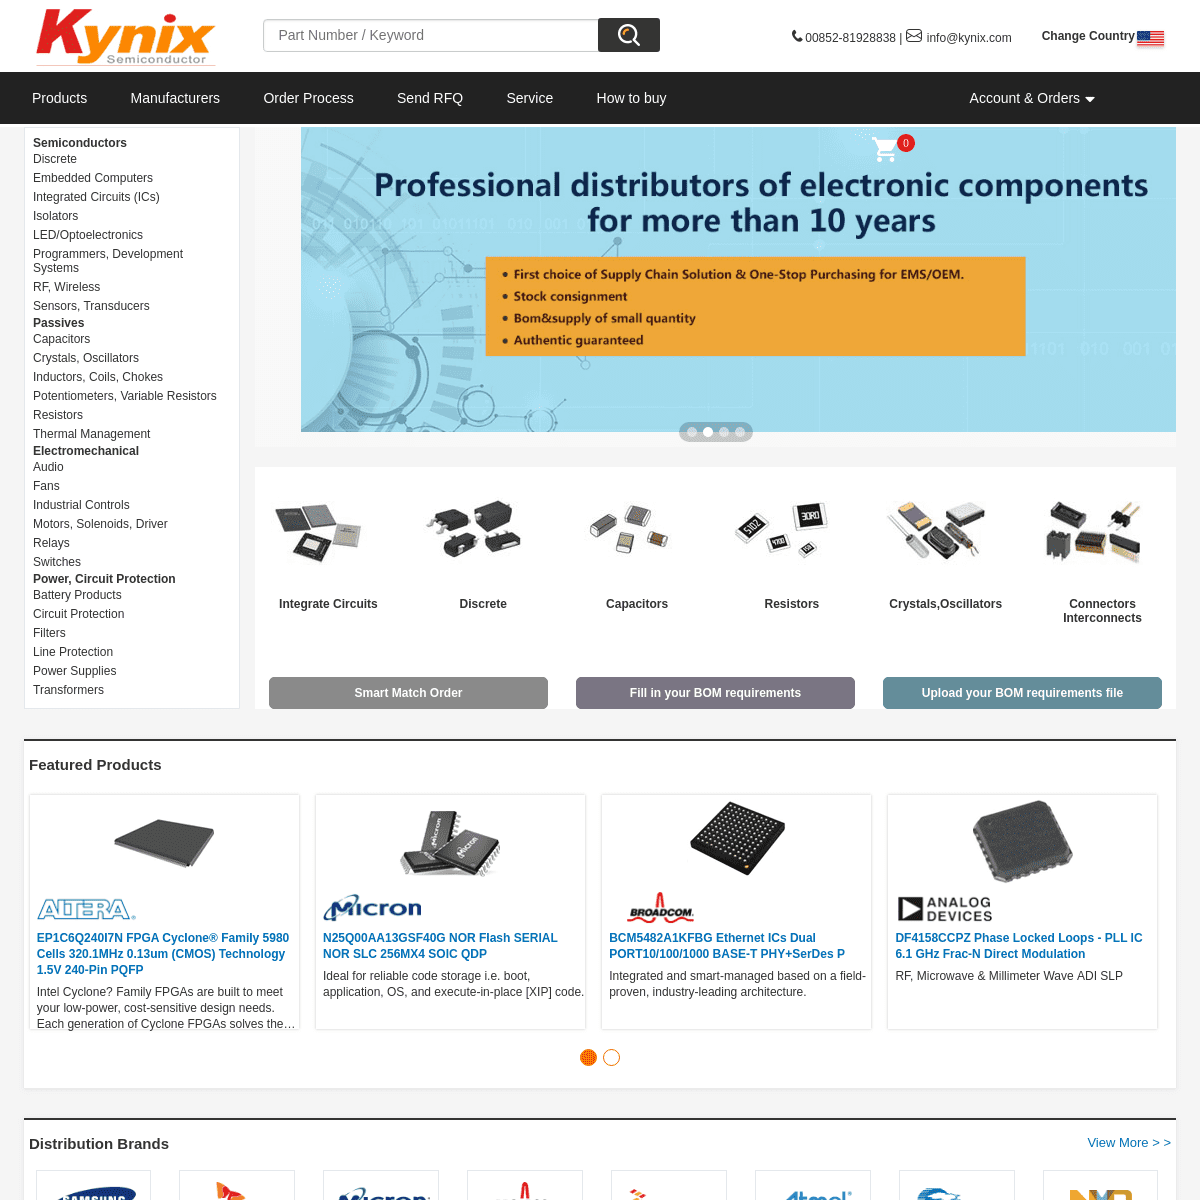 A complete backup of kynix.com